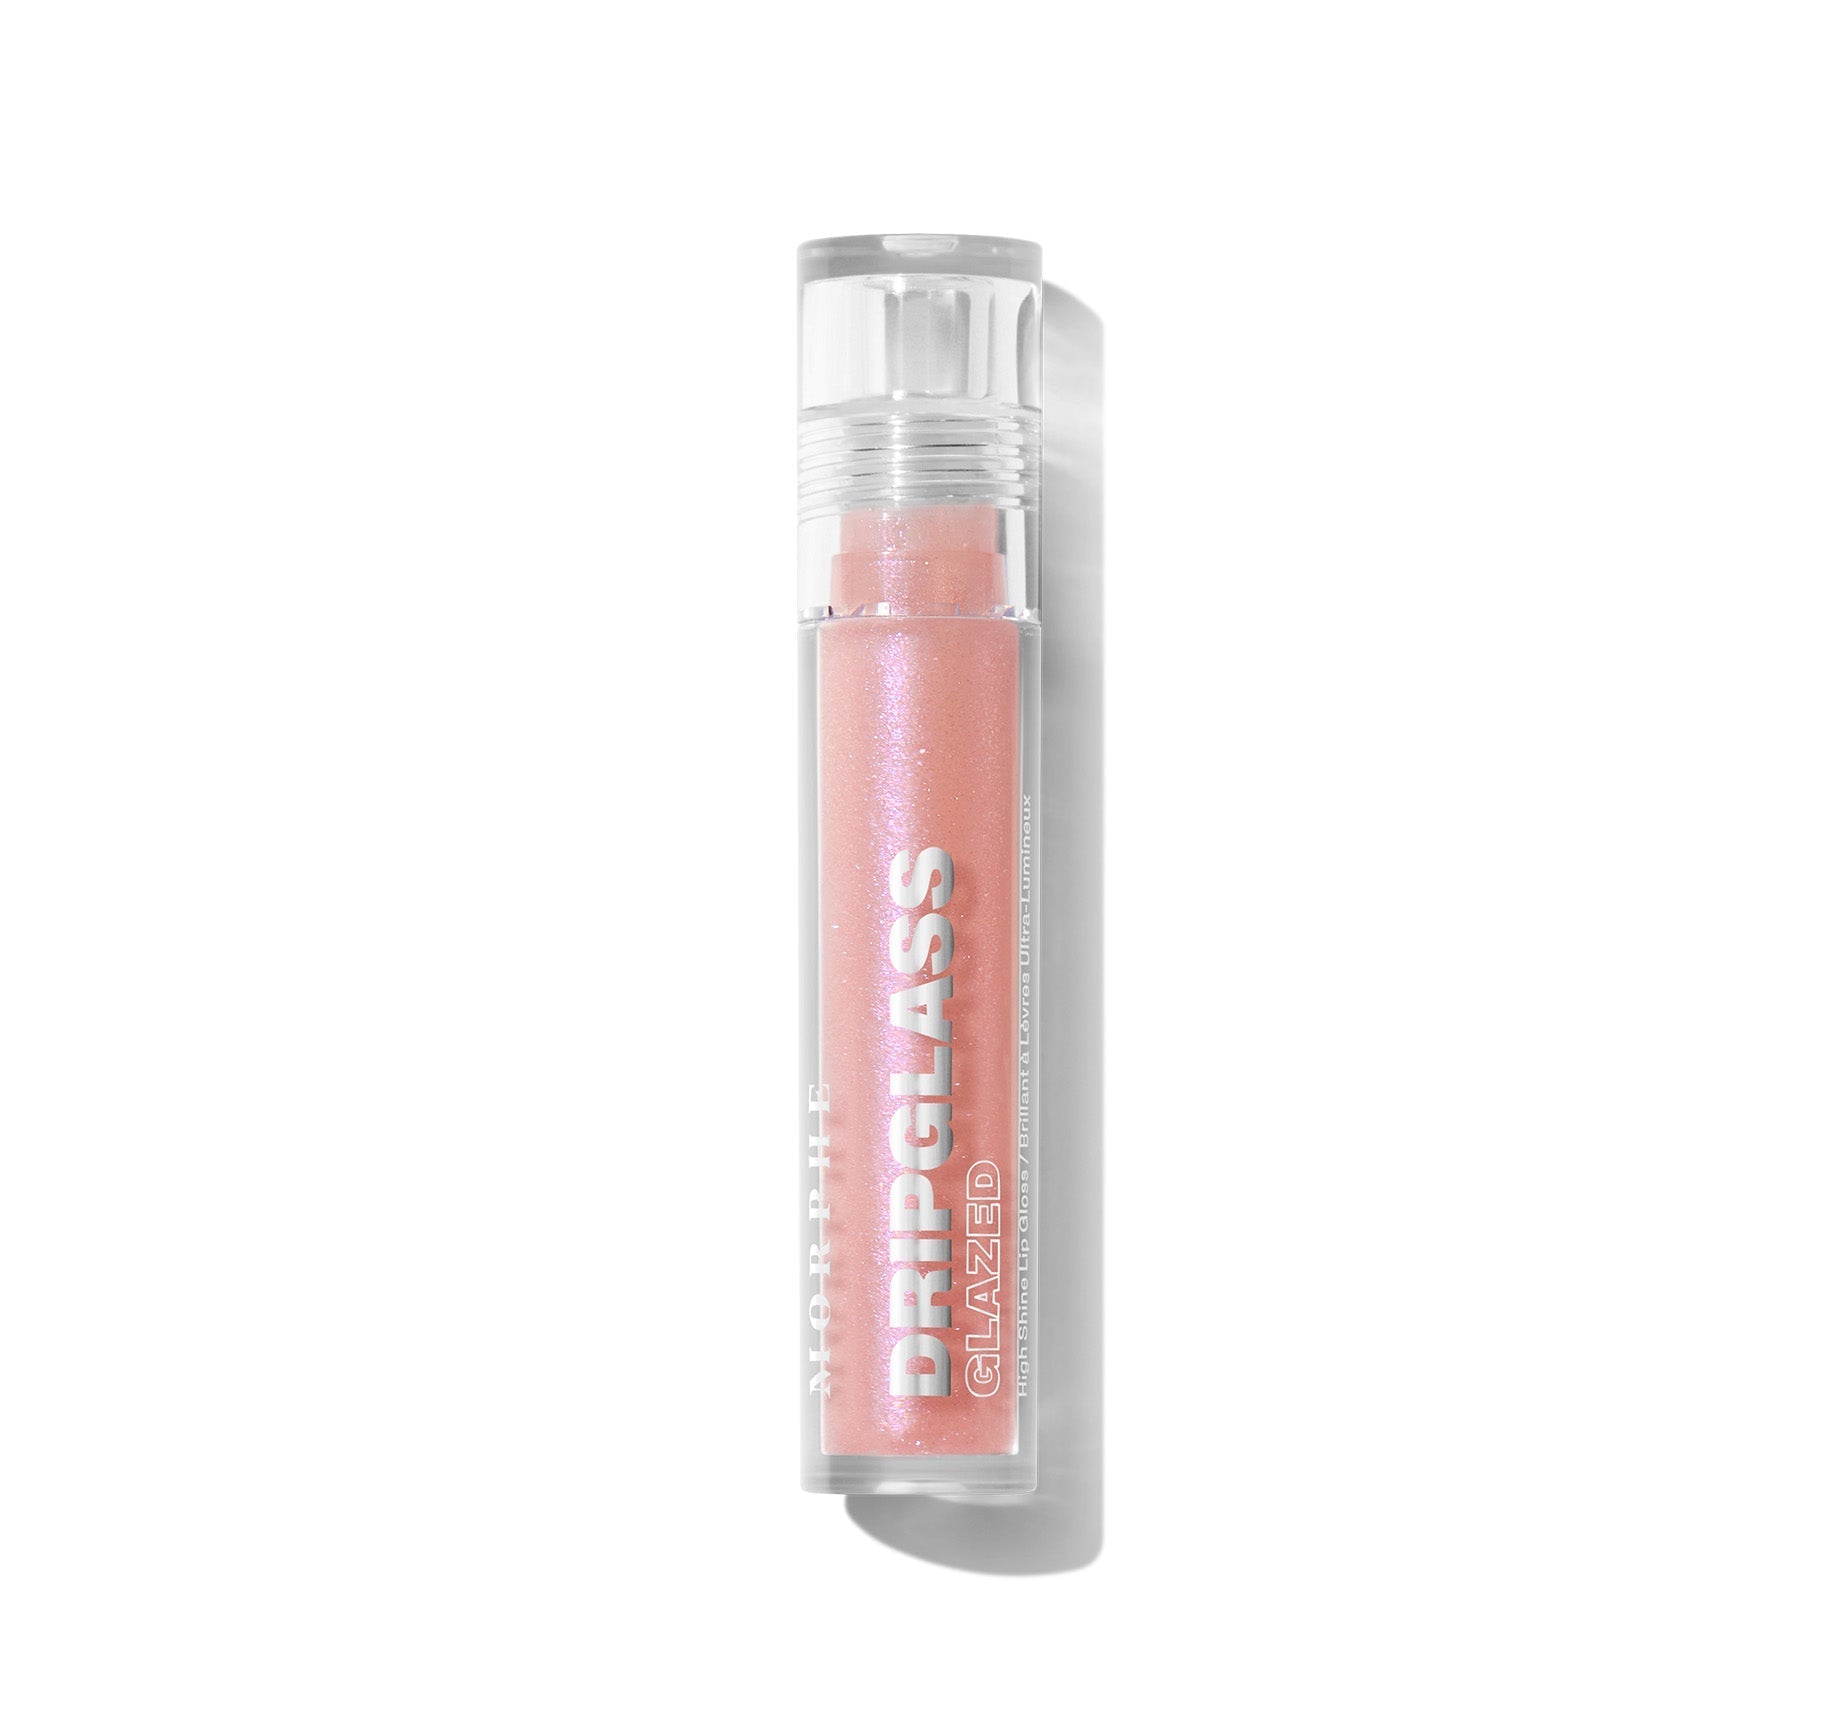 Aurascape Dripglass Glazed Highshine Pearlized Lip Gloss - Frose Bliss - Image 6